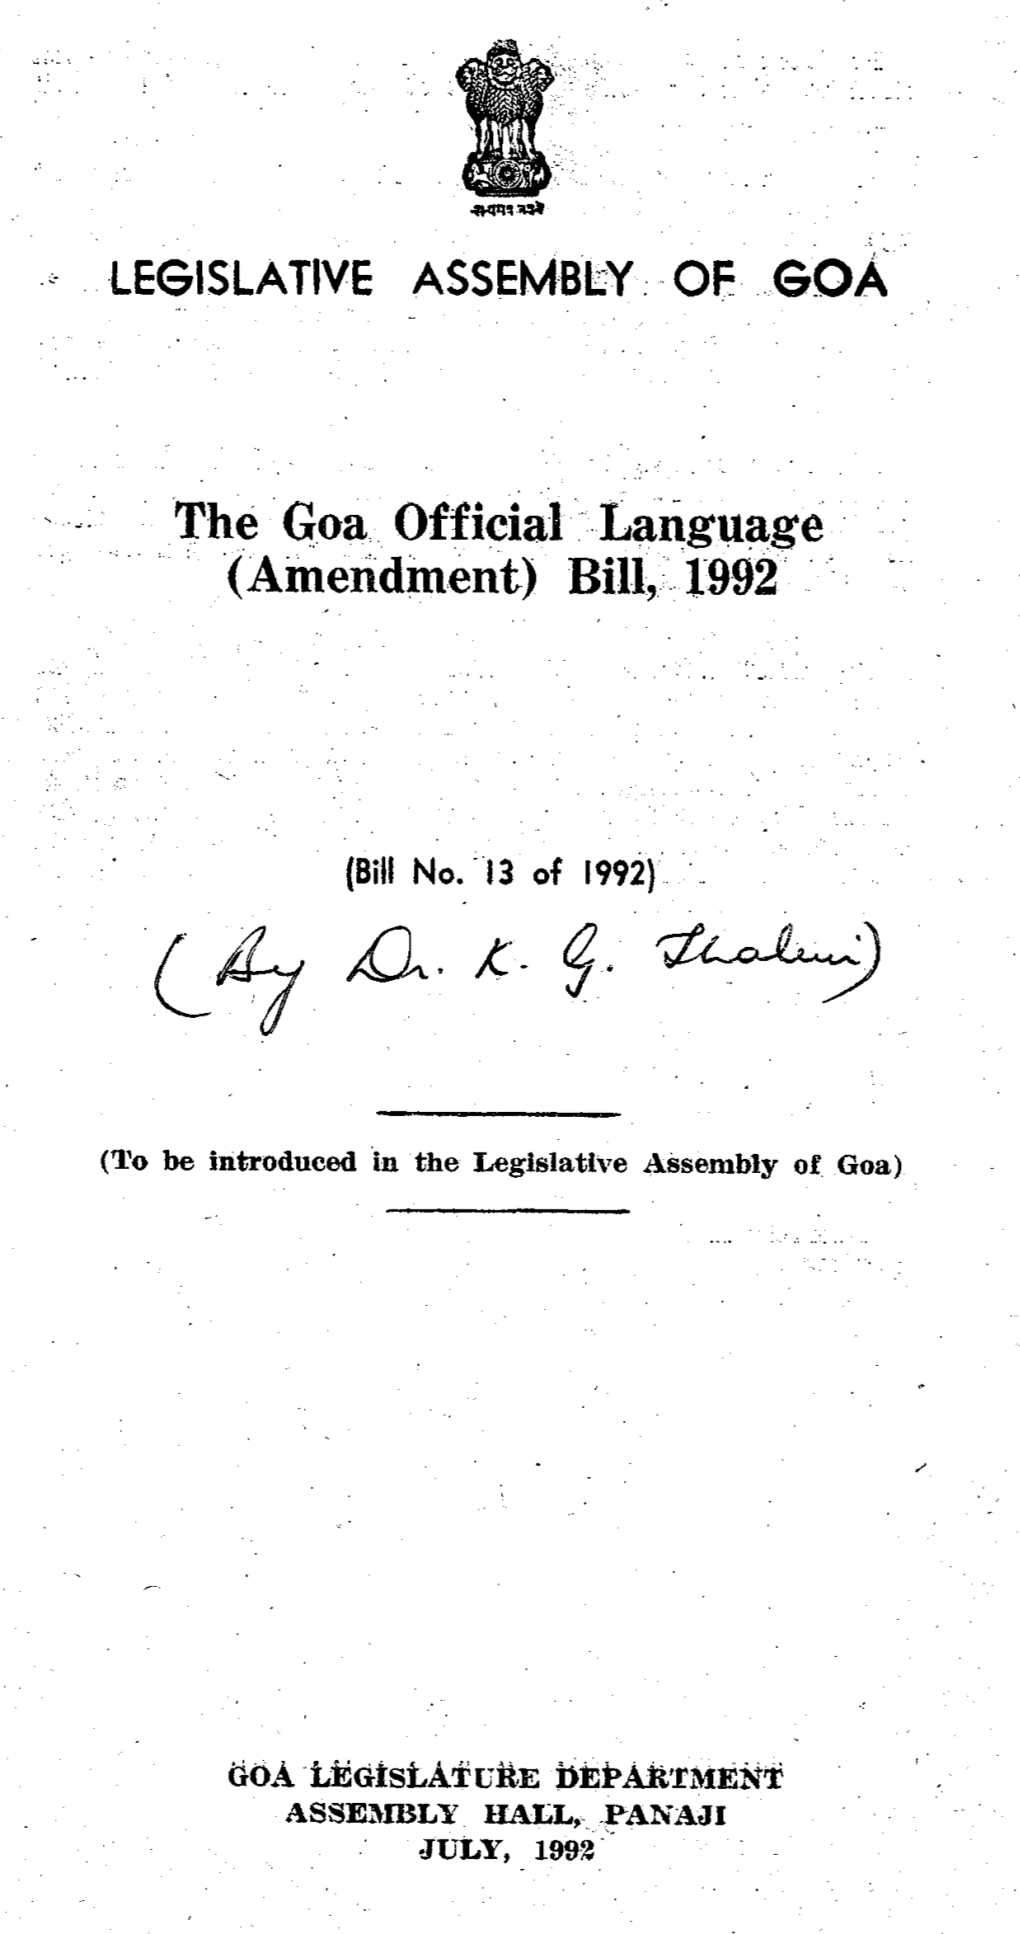 The Goa Official Language (Amendment) Bill, 1992